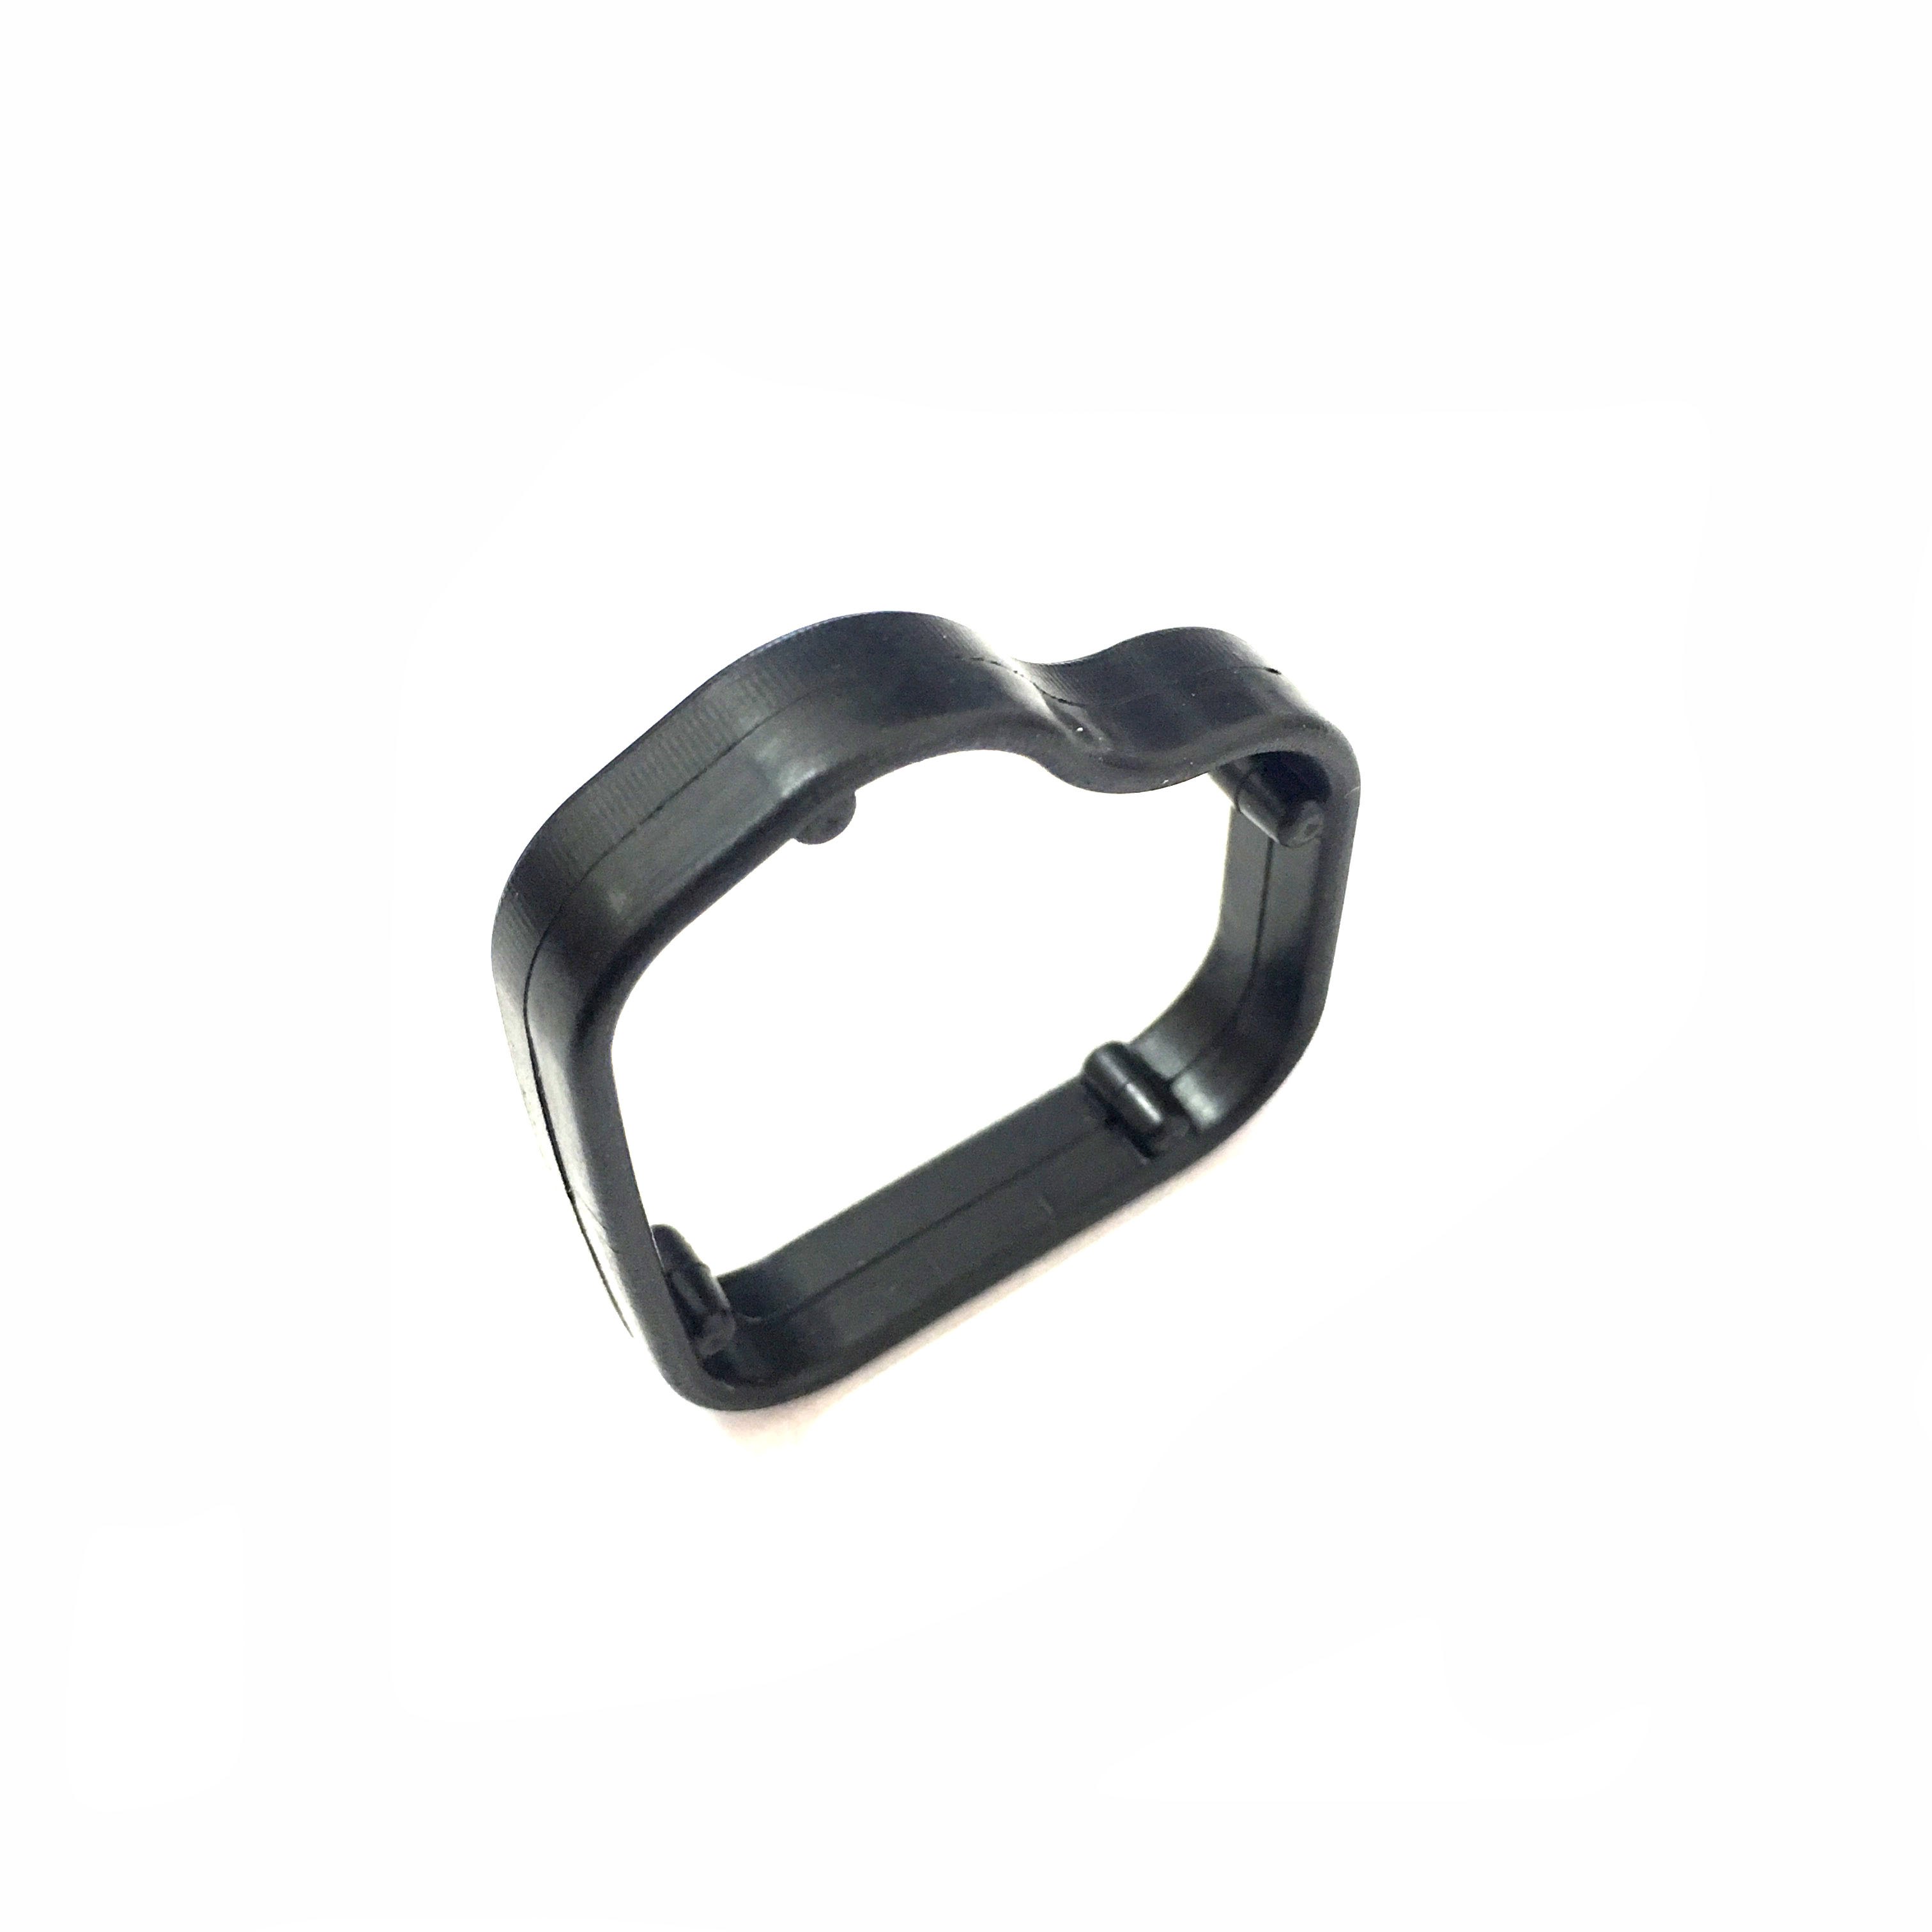 Oil Filter Sealing Ring 03L198 441/ 235.920 NBR Black Rubber Kits For VW Car 